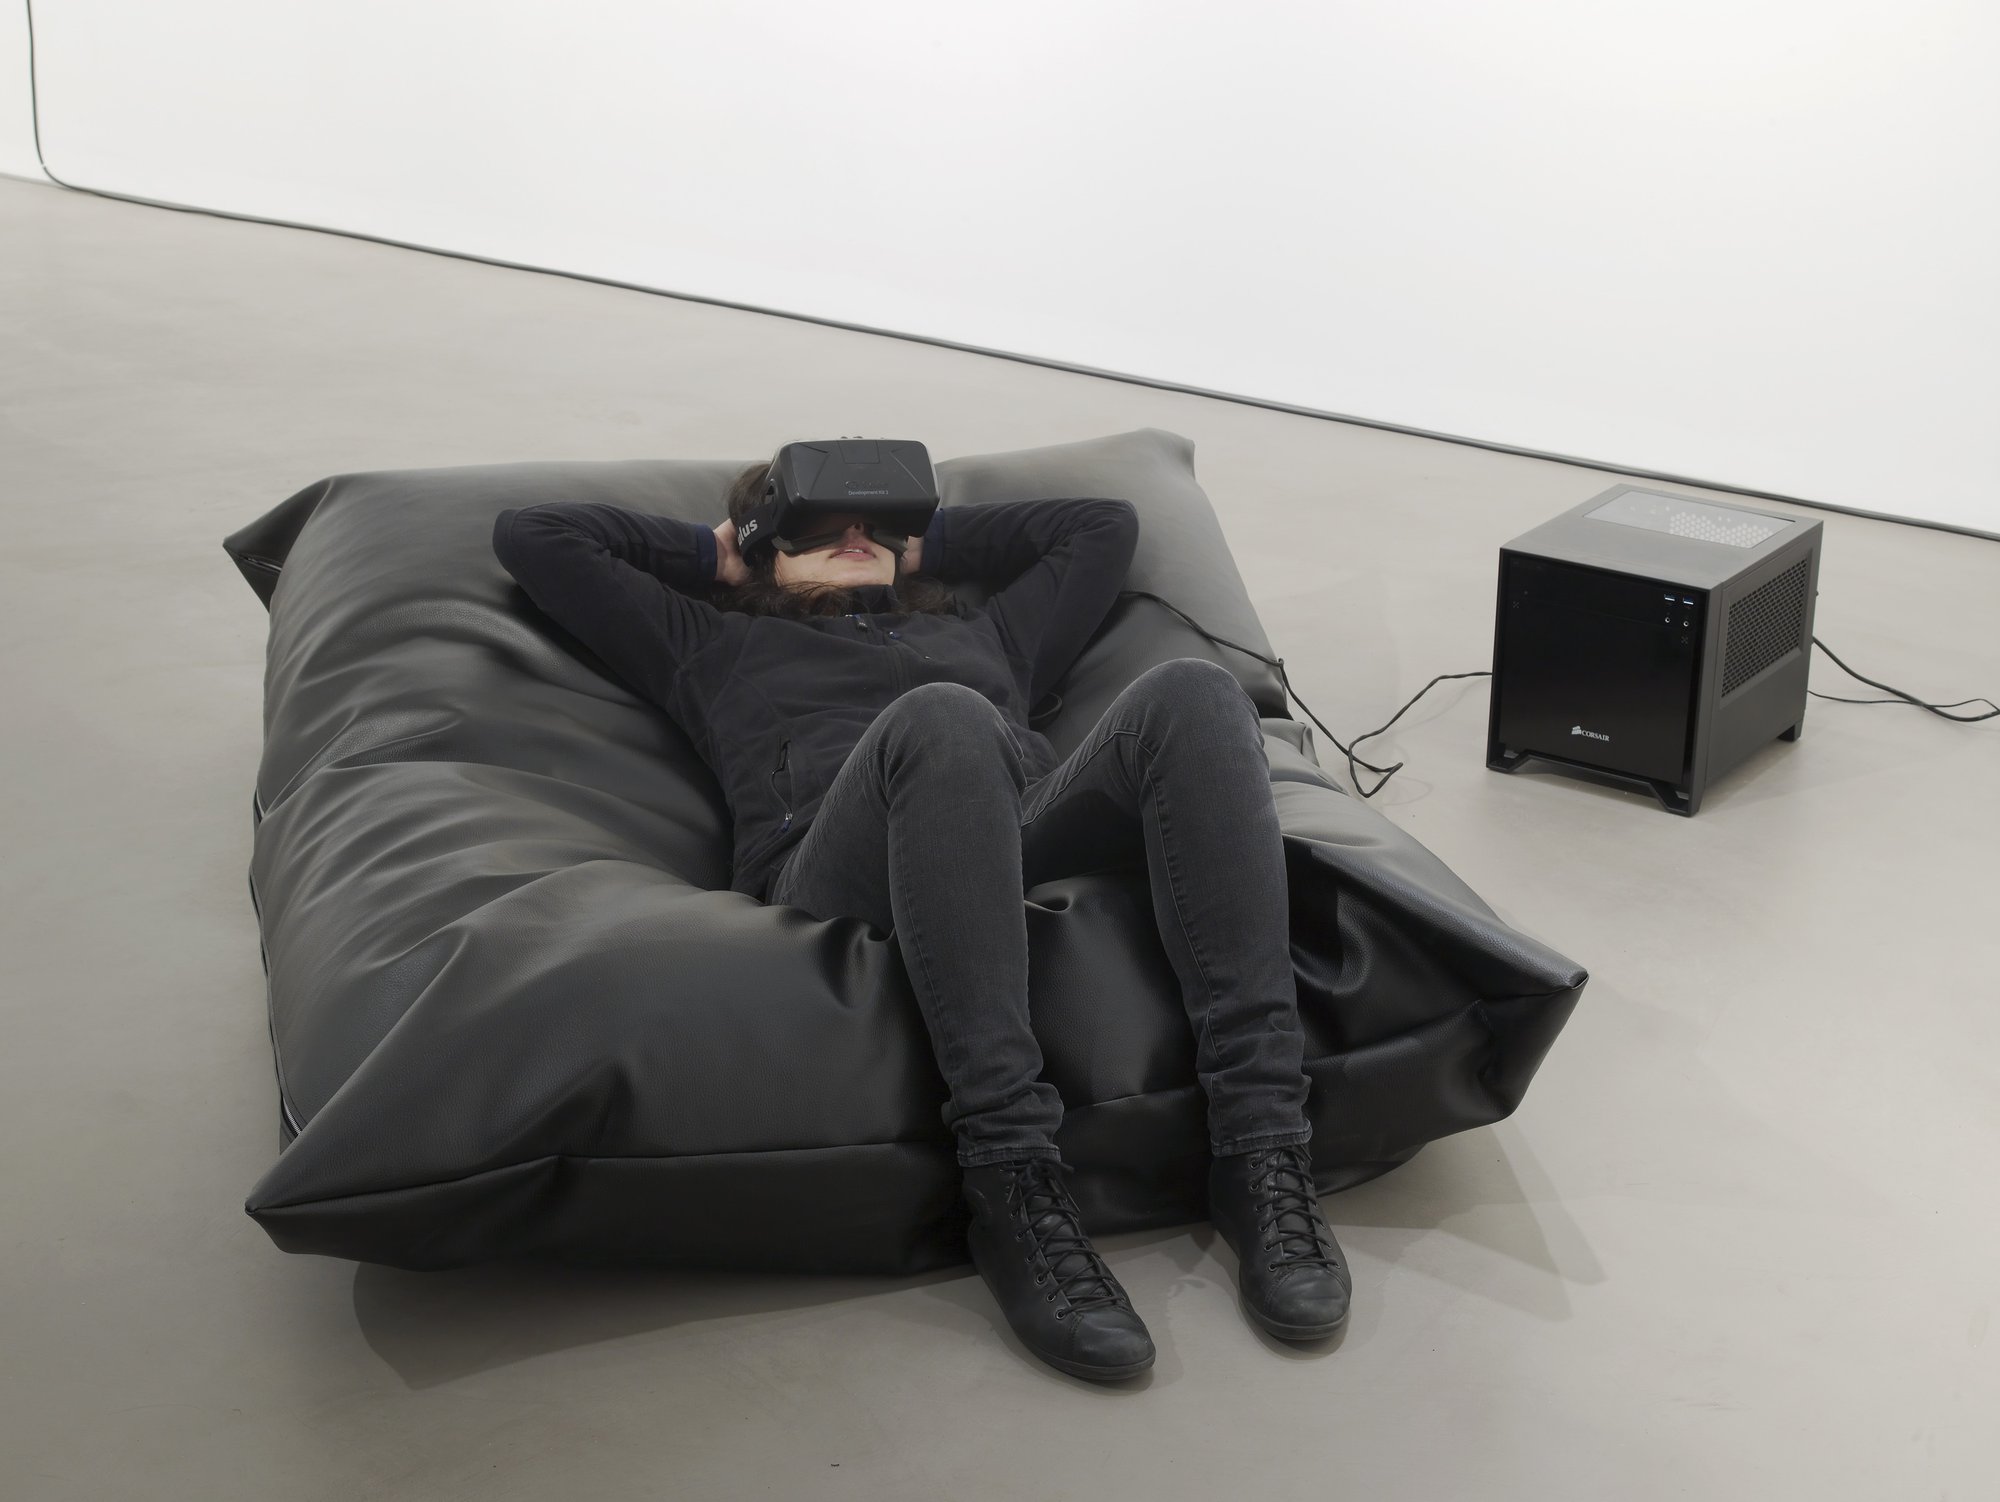 Sidsel Meineche Hansen, DICKGIRL 3D(X) in VR format, a gaming PC, Oculus Rift headset, headphones, beanbag in vegan leather, 2016. Installation view, SECOND SEX WAR ZONE, Gasworks, London, 2016